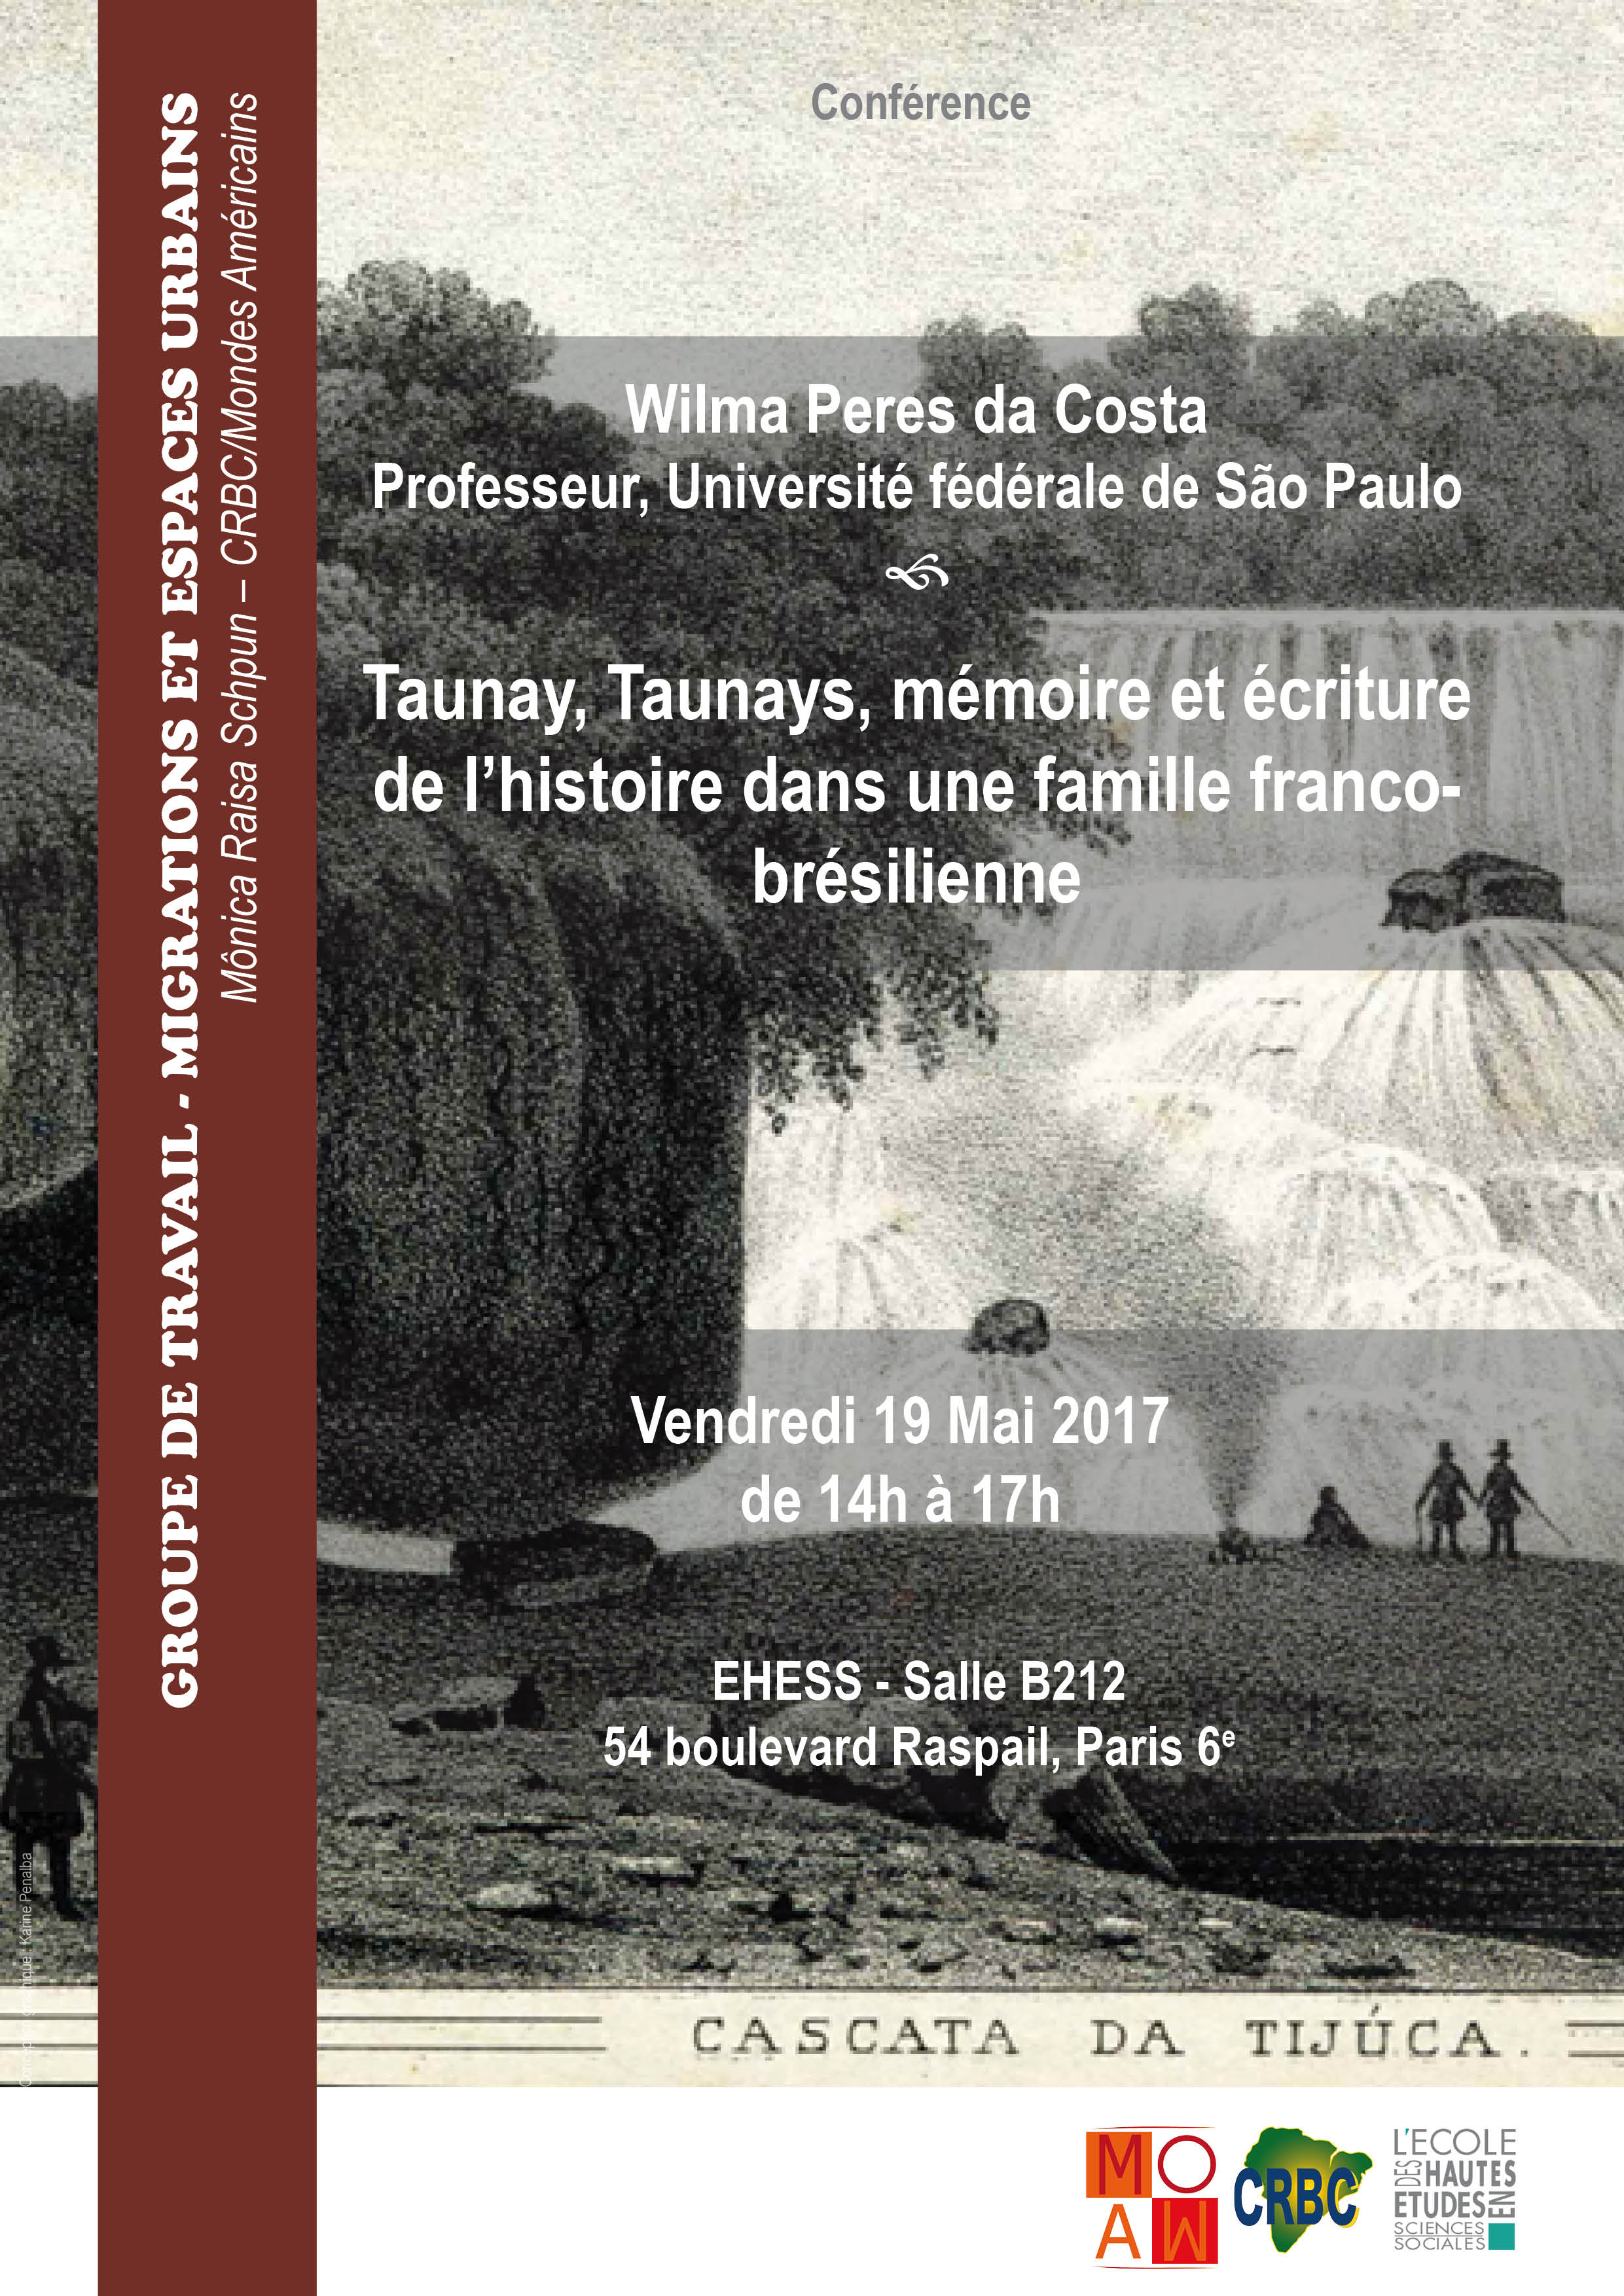 Conférence de Wilma Peres da Costa 